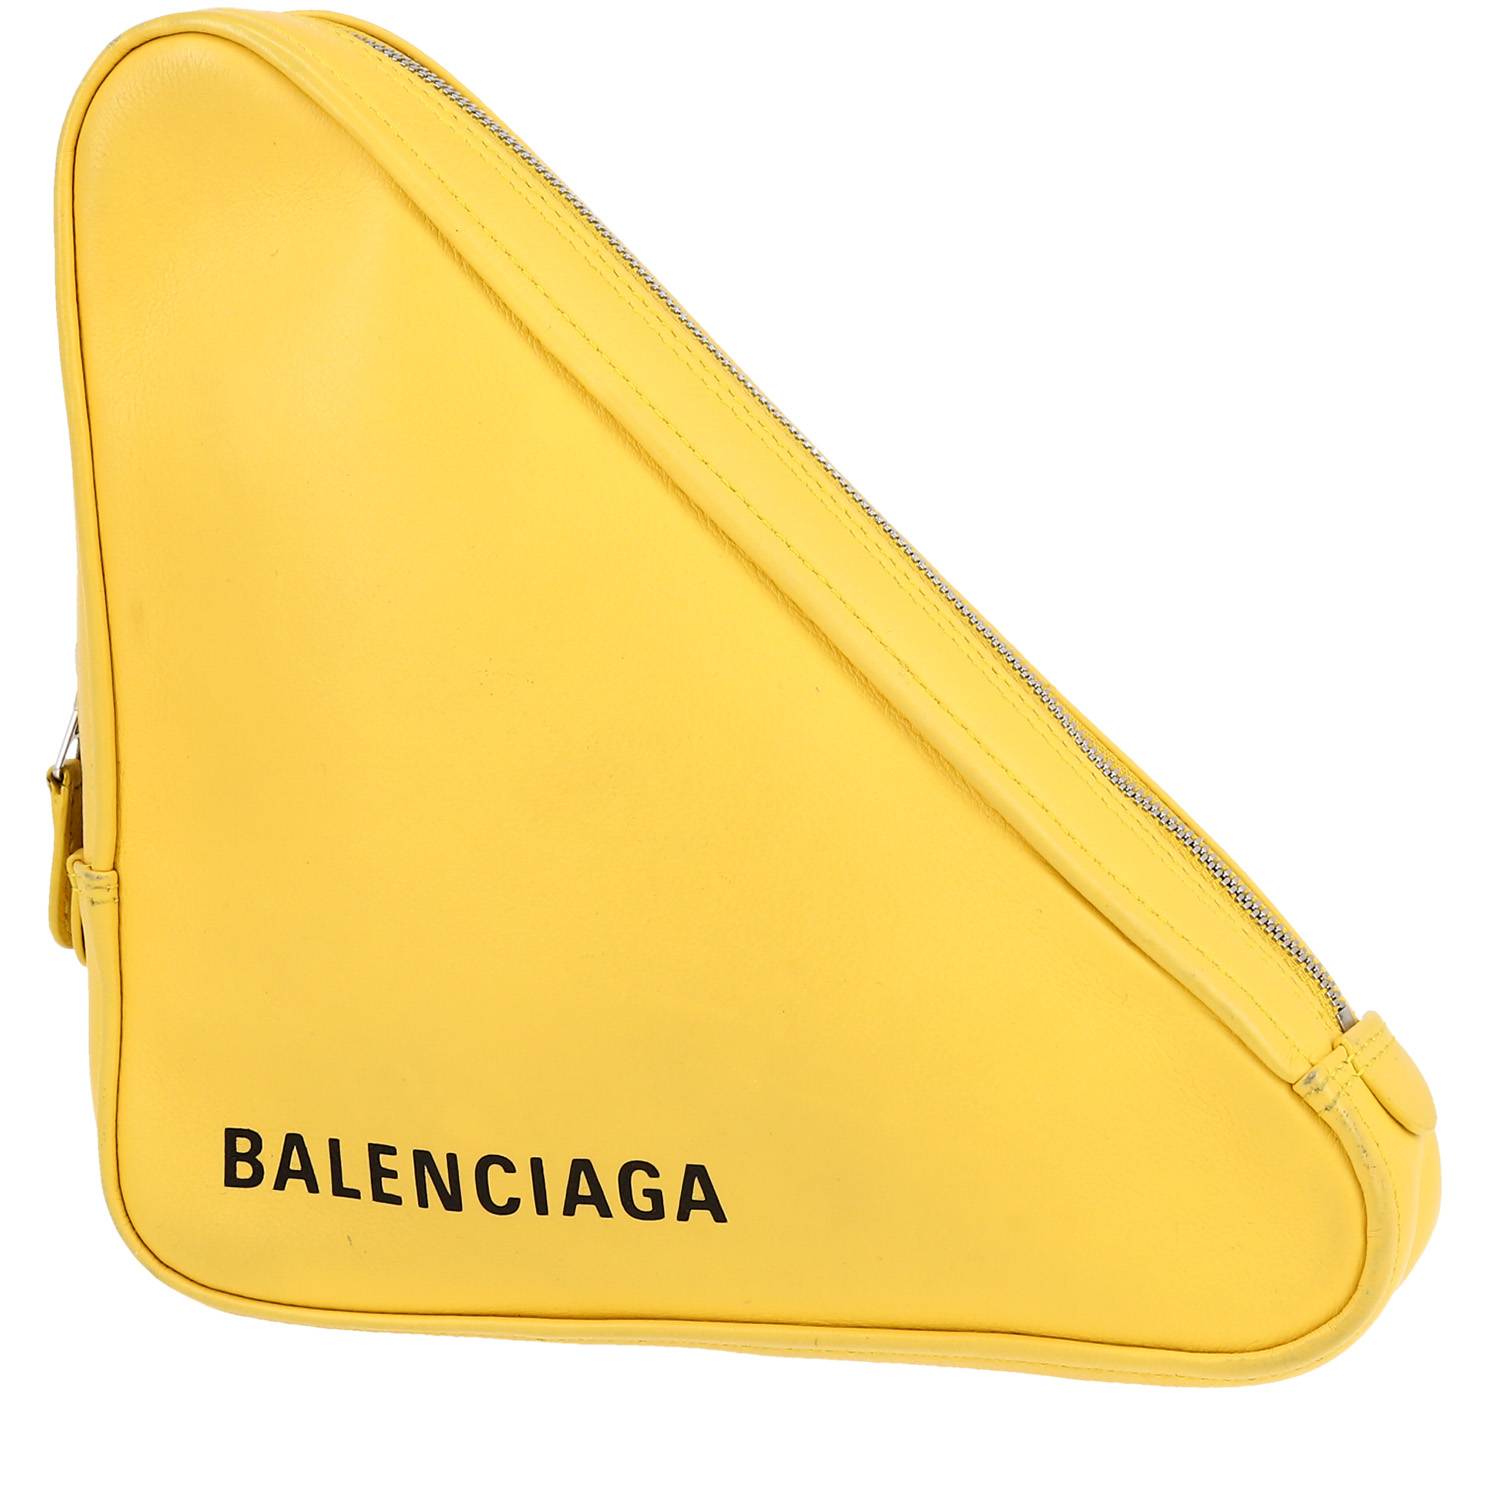 Balenciaga $1,800 purse looks like a Lay's potato chip bag